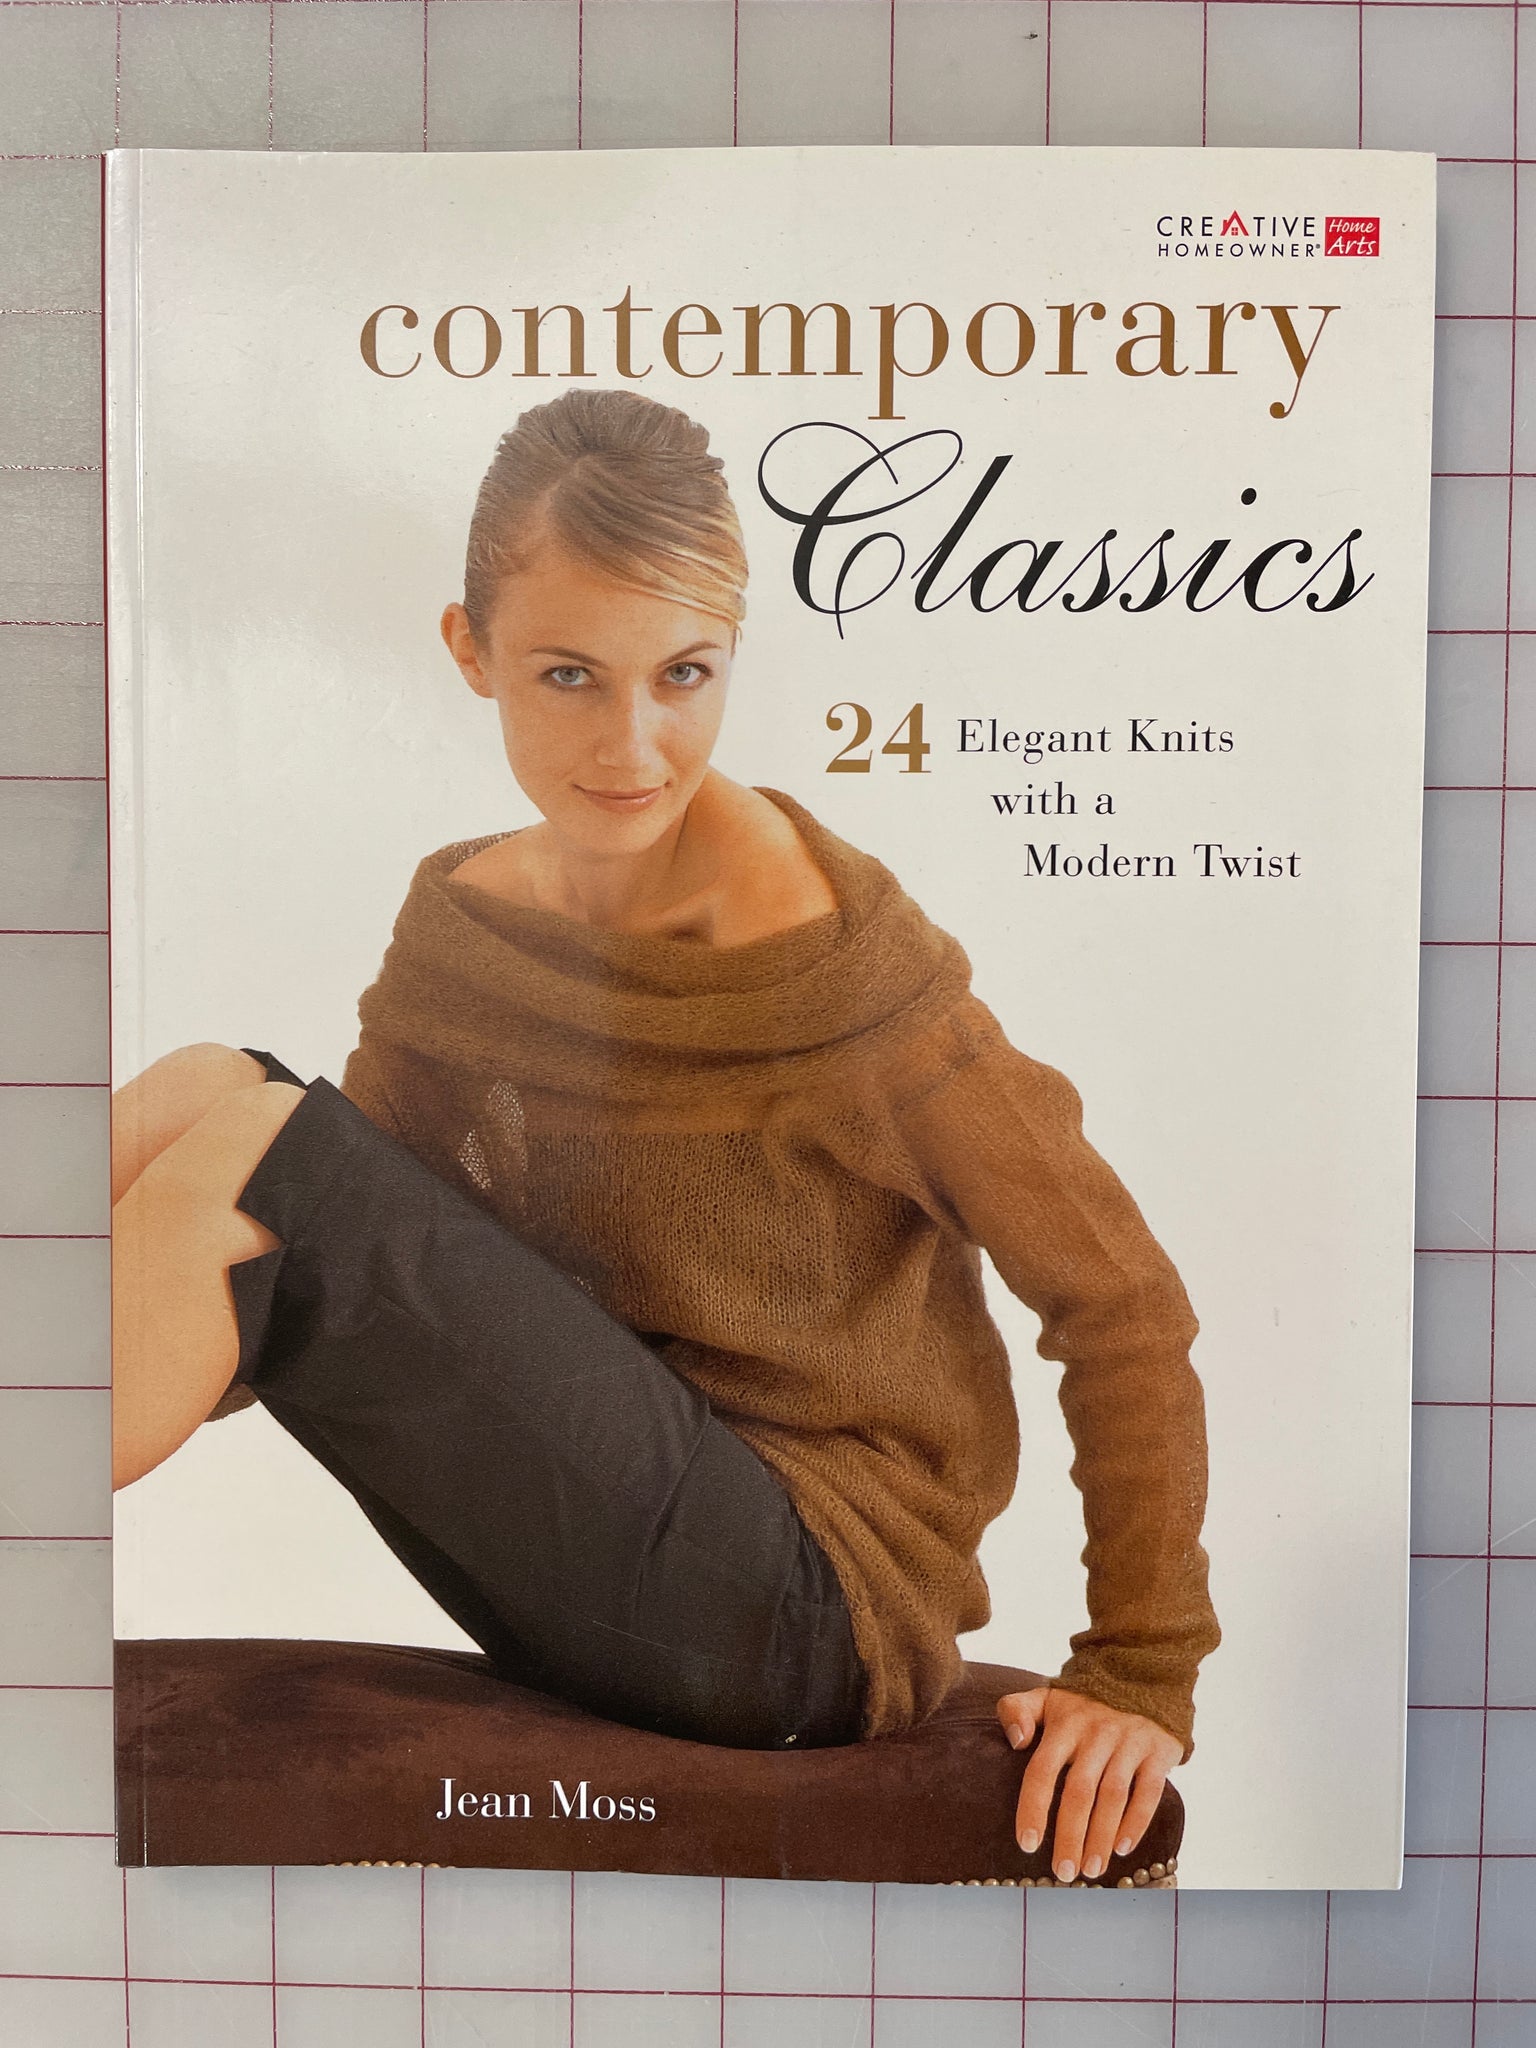 SALE 2007 Knitting Book - "Contemporary Classics"